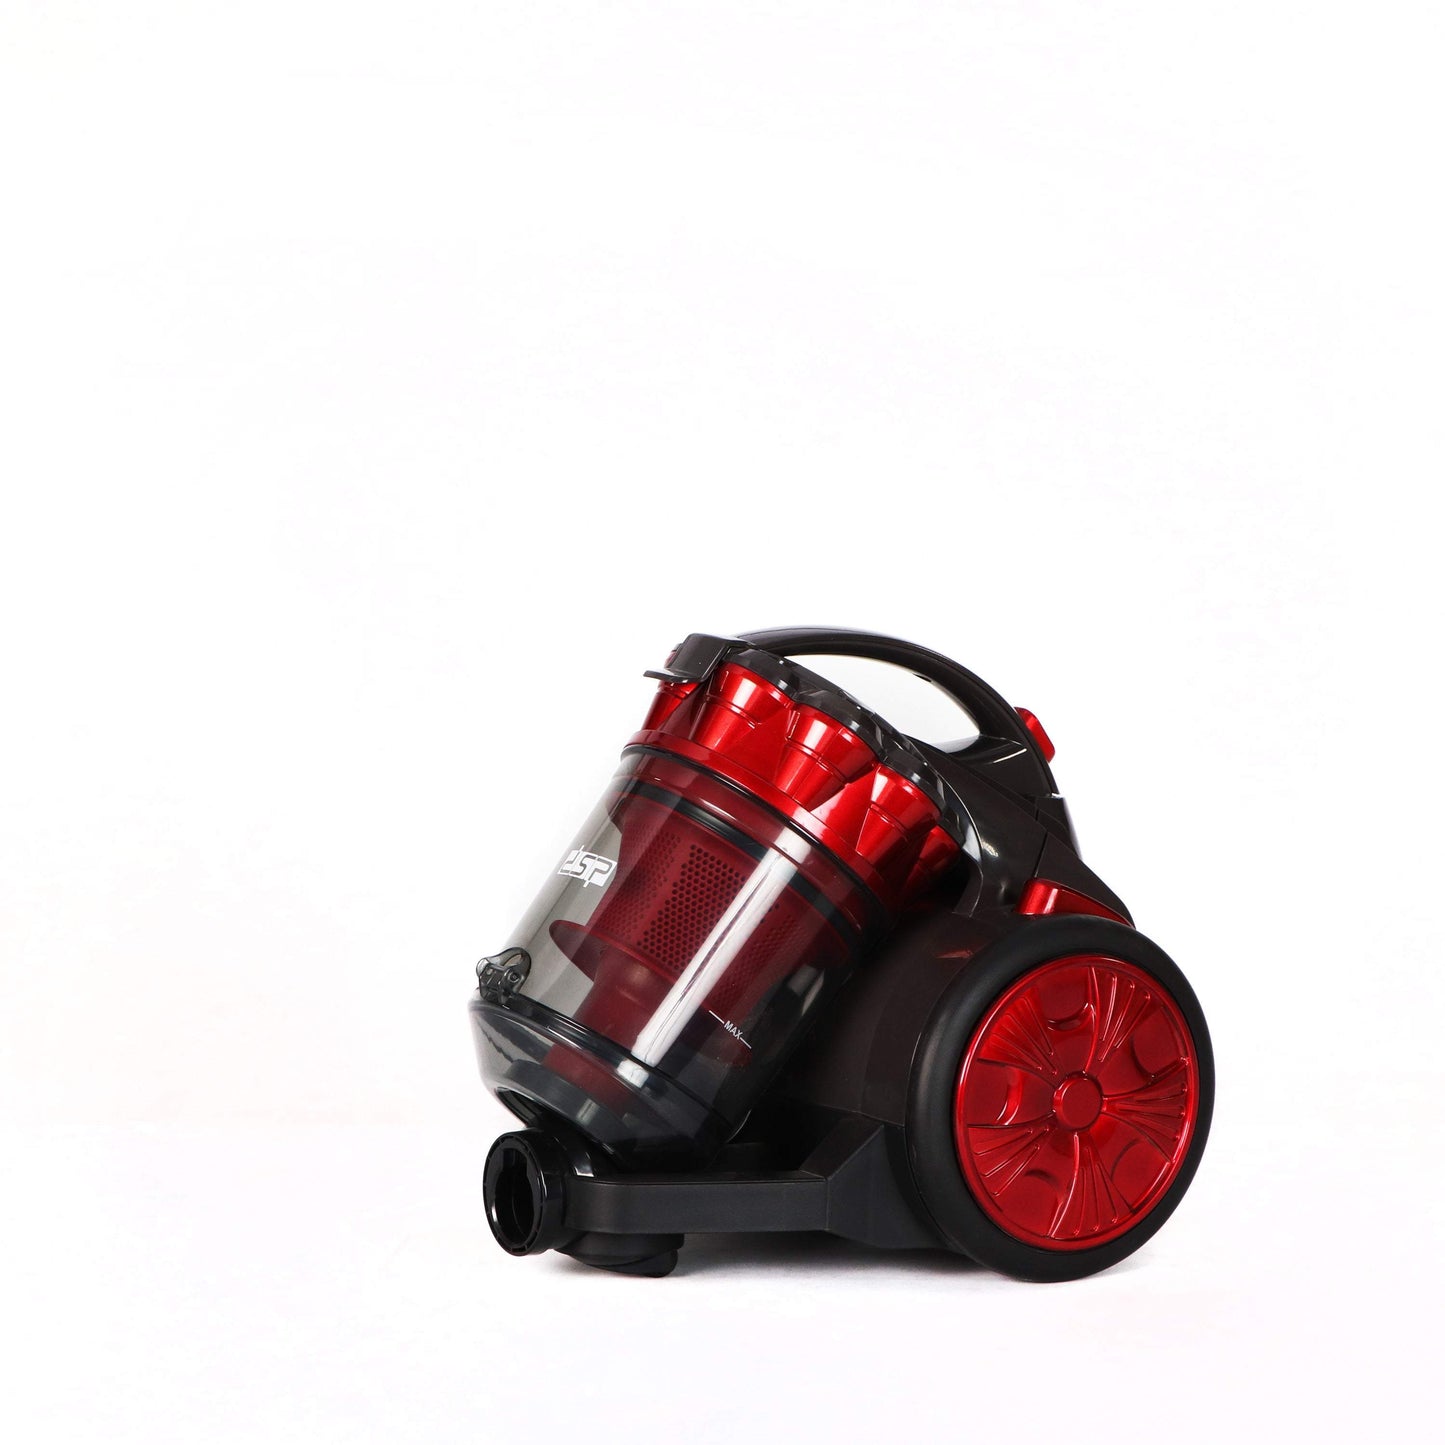 DSP Vacuum Tank Filter 2L Cleaner KD2014-Royal Brands Co-